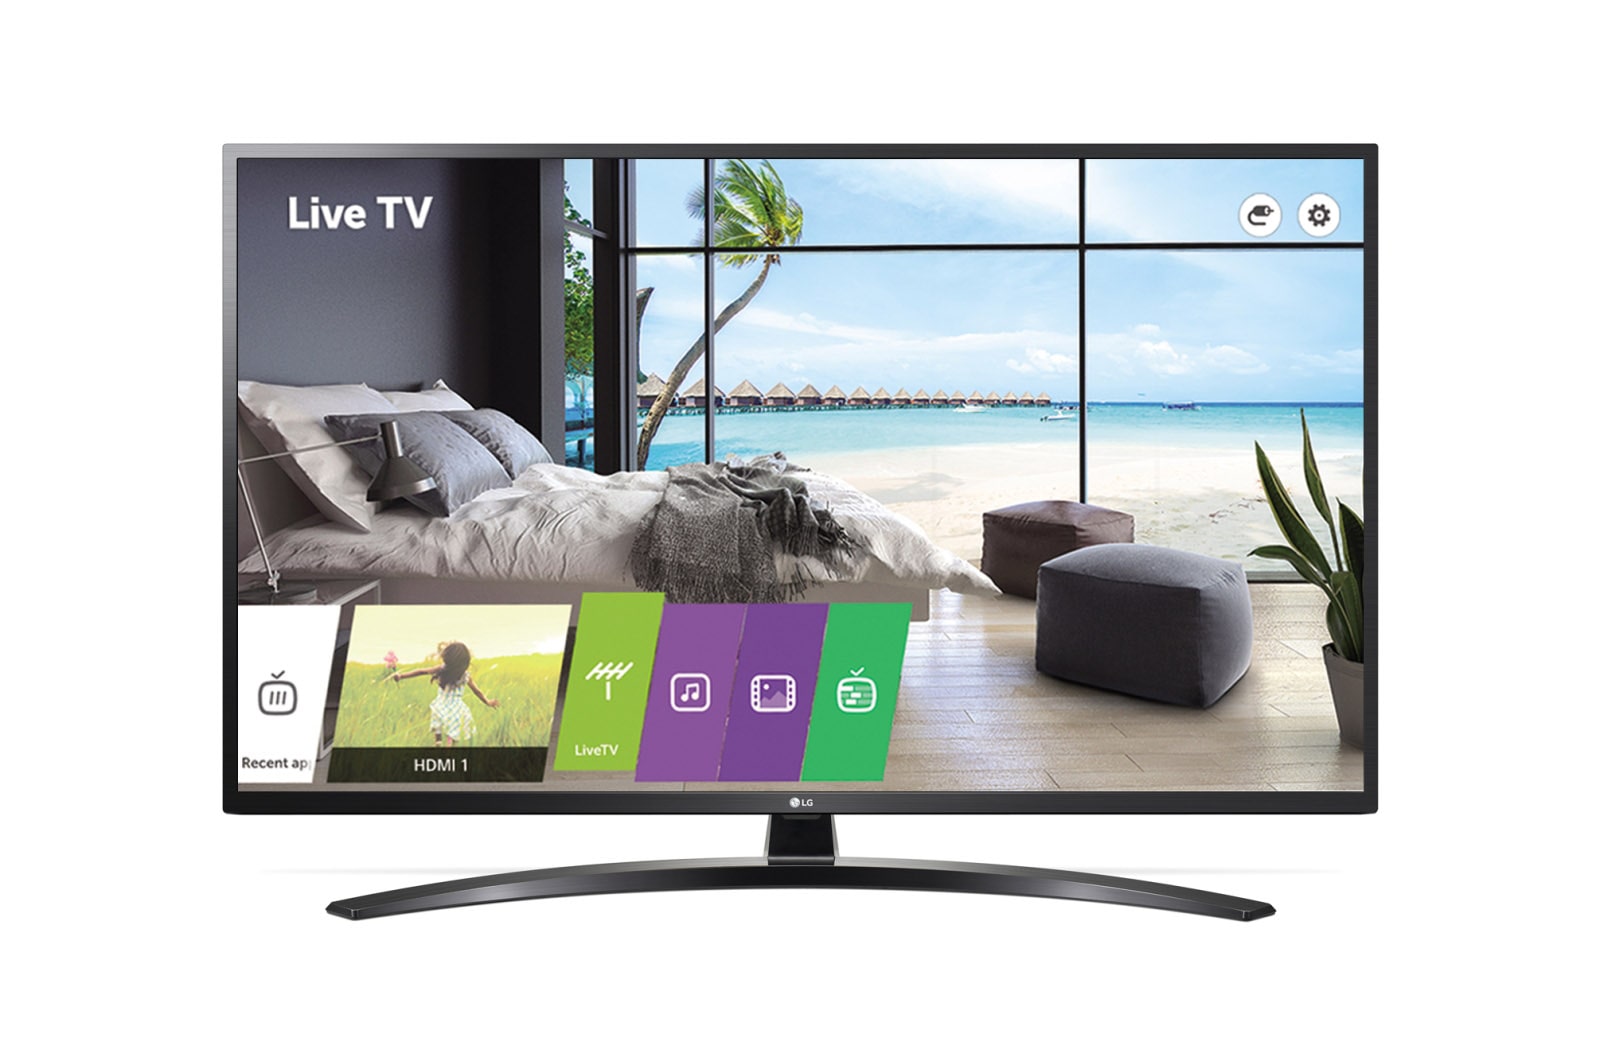 LG 65” UT570H Series UHD TV for Hospitality & Healthcare with Pro:Centric Direct, Pro:Idoim, EZ-Manager & USB Data Cloning, 65UT570H9UB